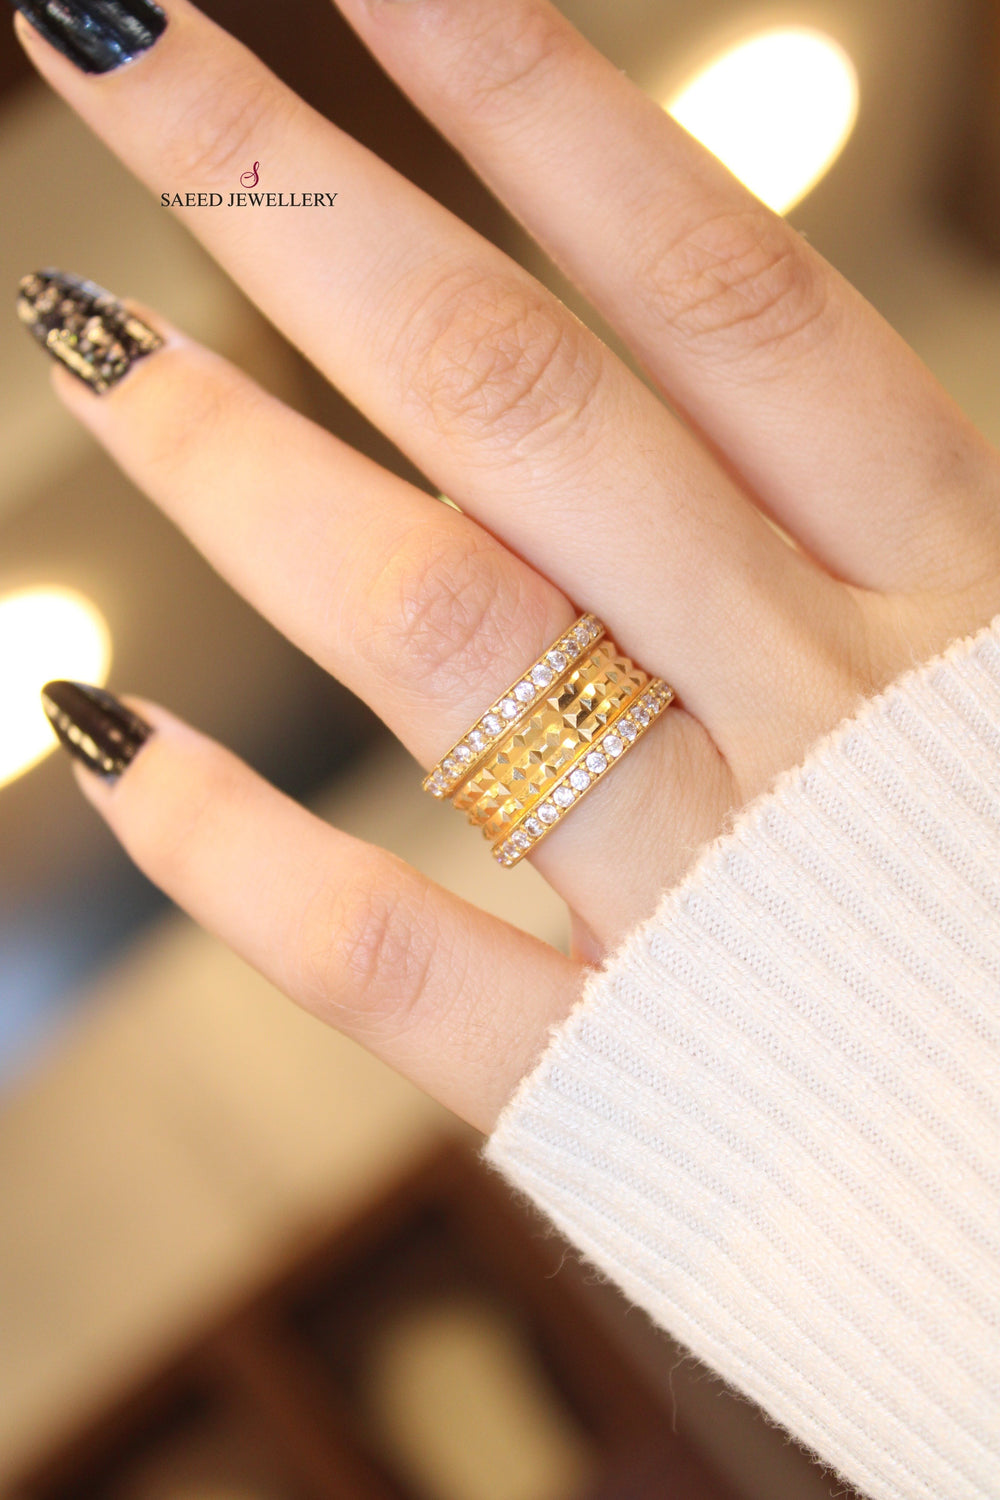 21K Gold Zirconia Wedding Ring by Saeed Jewelry - Image 2